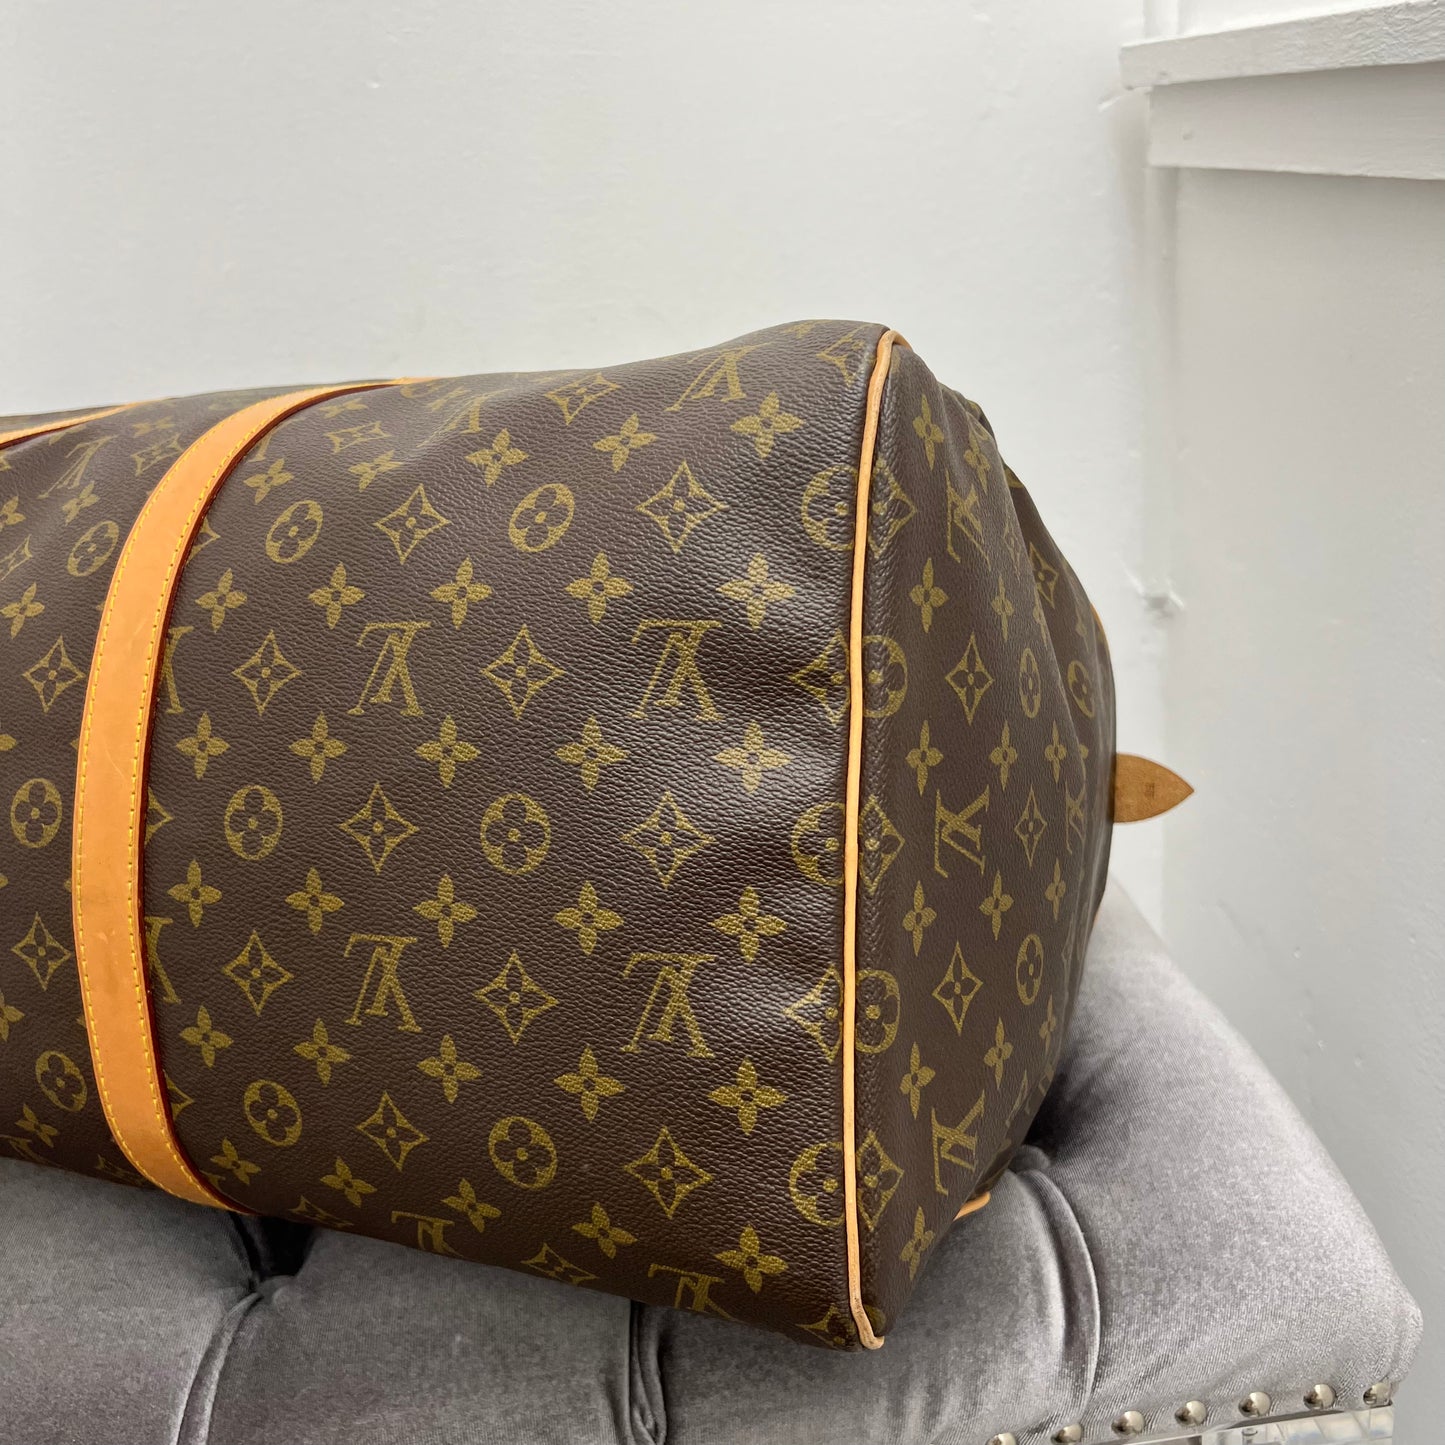 Louis Vuitton Monogram Keepall 55 Duffle Bag